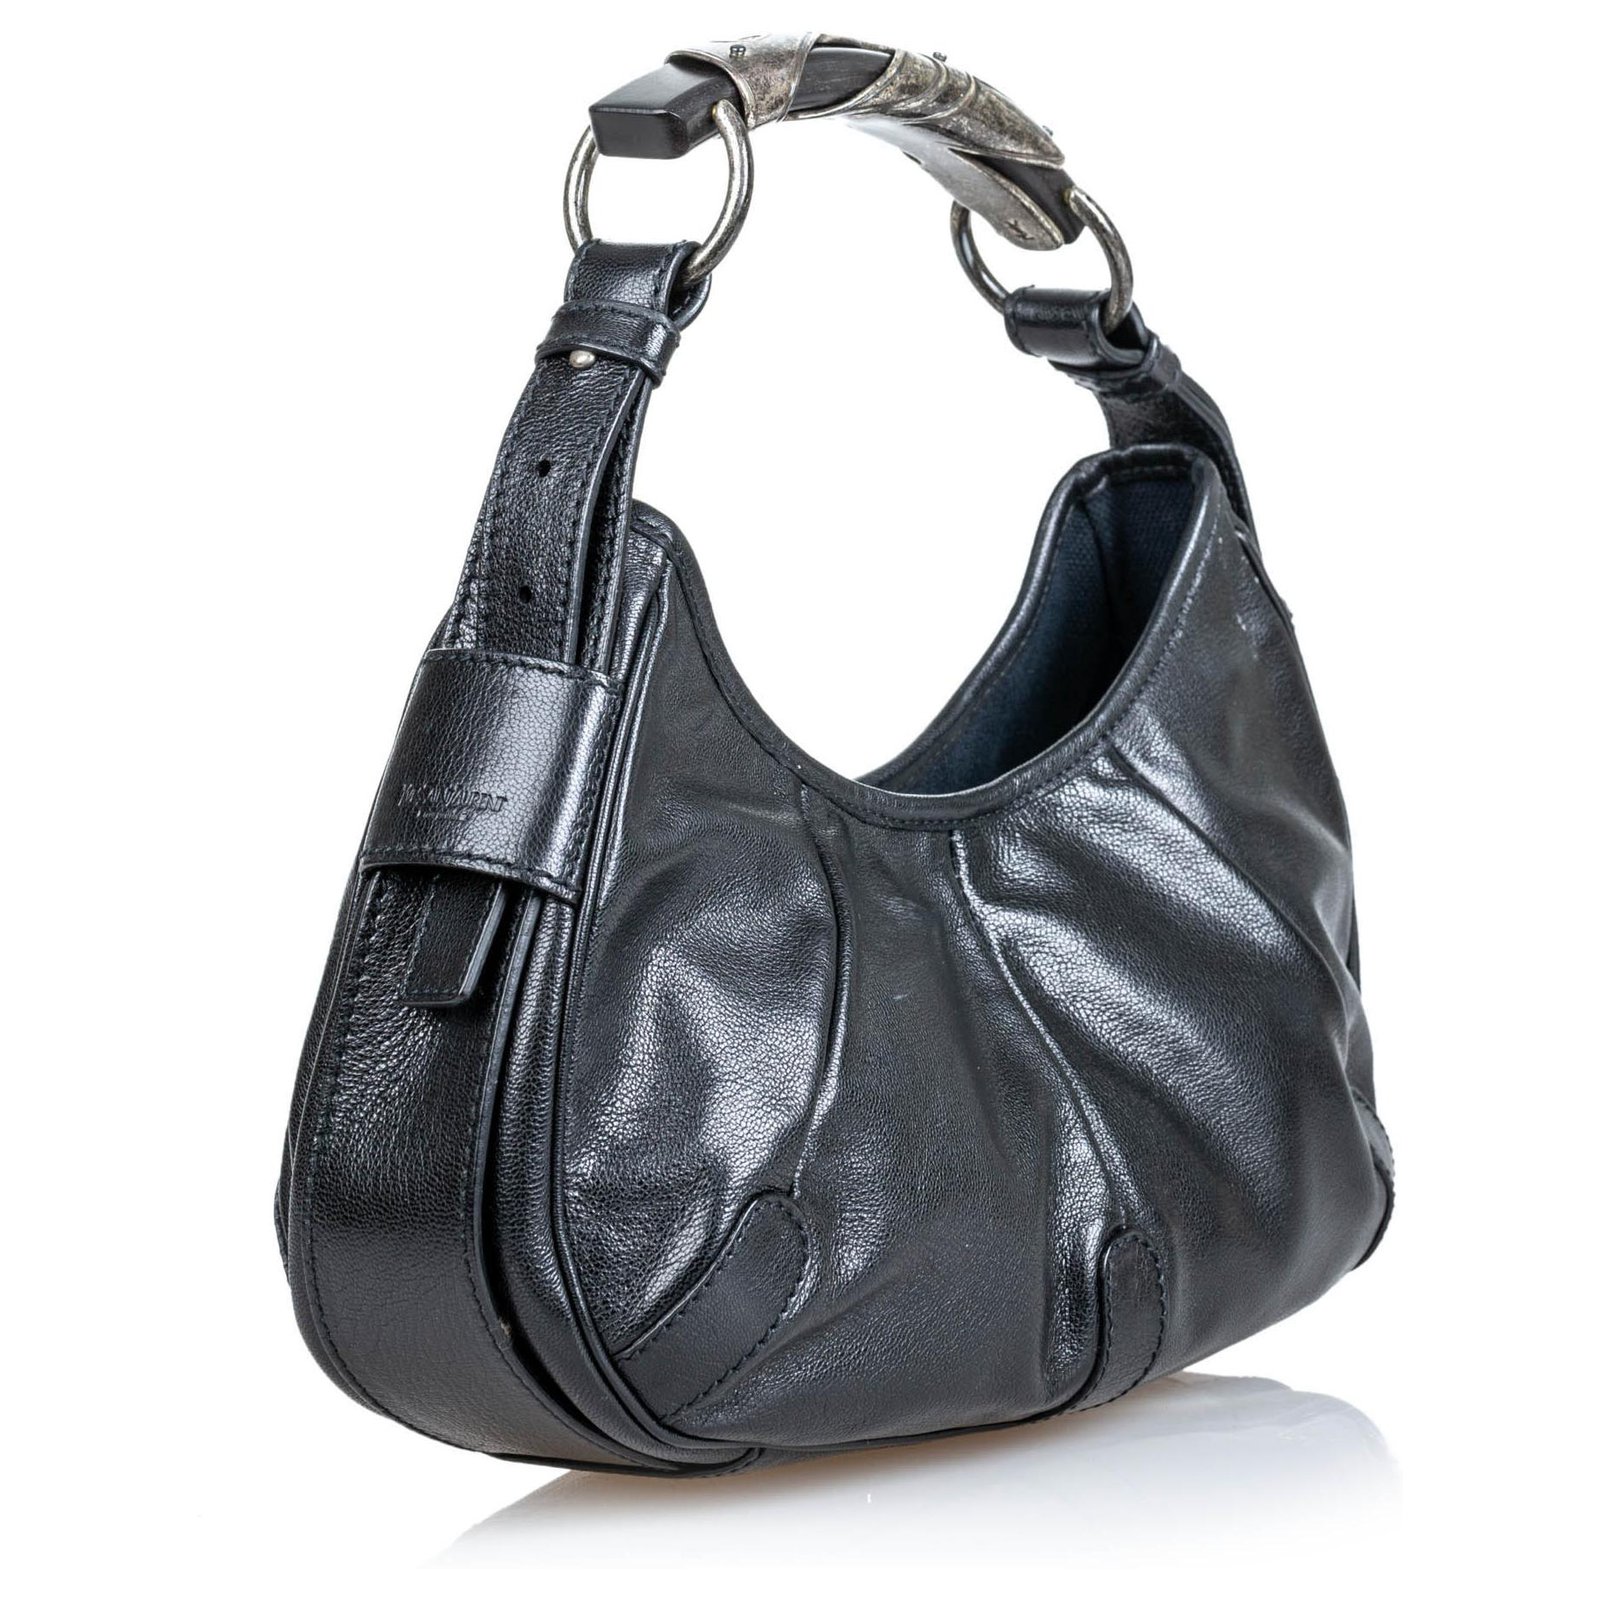 Mombasa leather handbag Yves Saint Laurent Black in Leather - 36691428